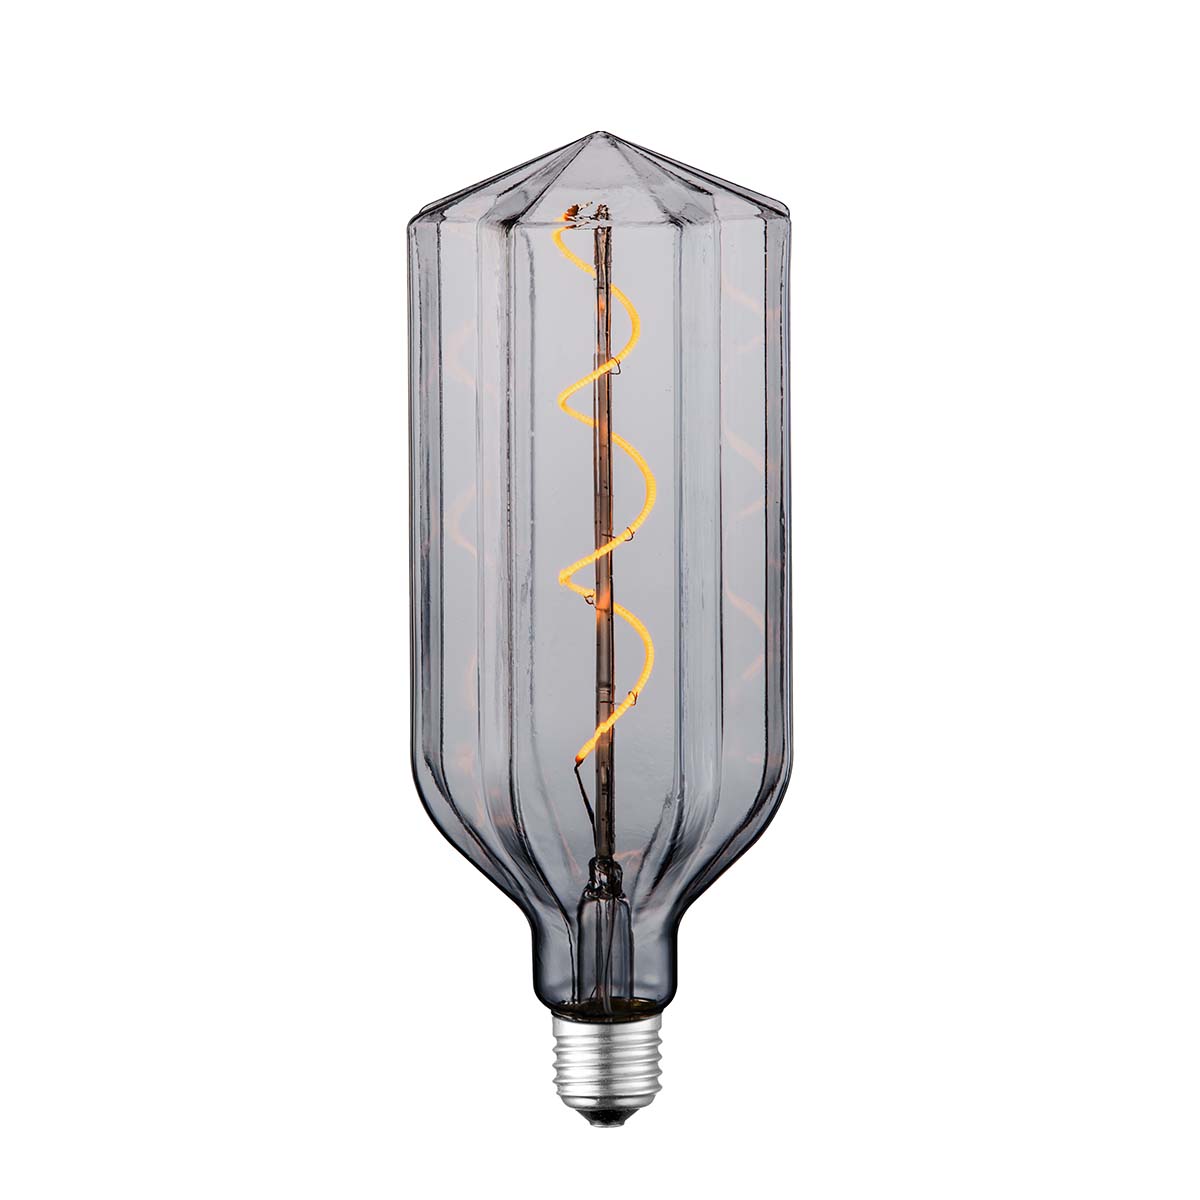 Tangla lighting - TLB-8107-04SM - LED Light Bulb Single Spiral filament - special 4W smoke - apex - dimmable - E27